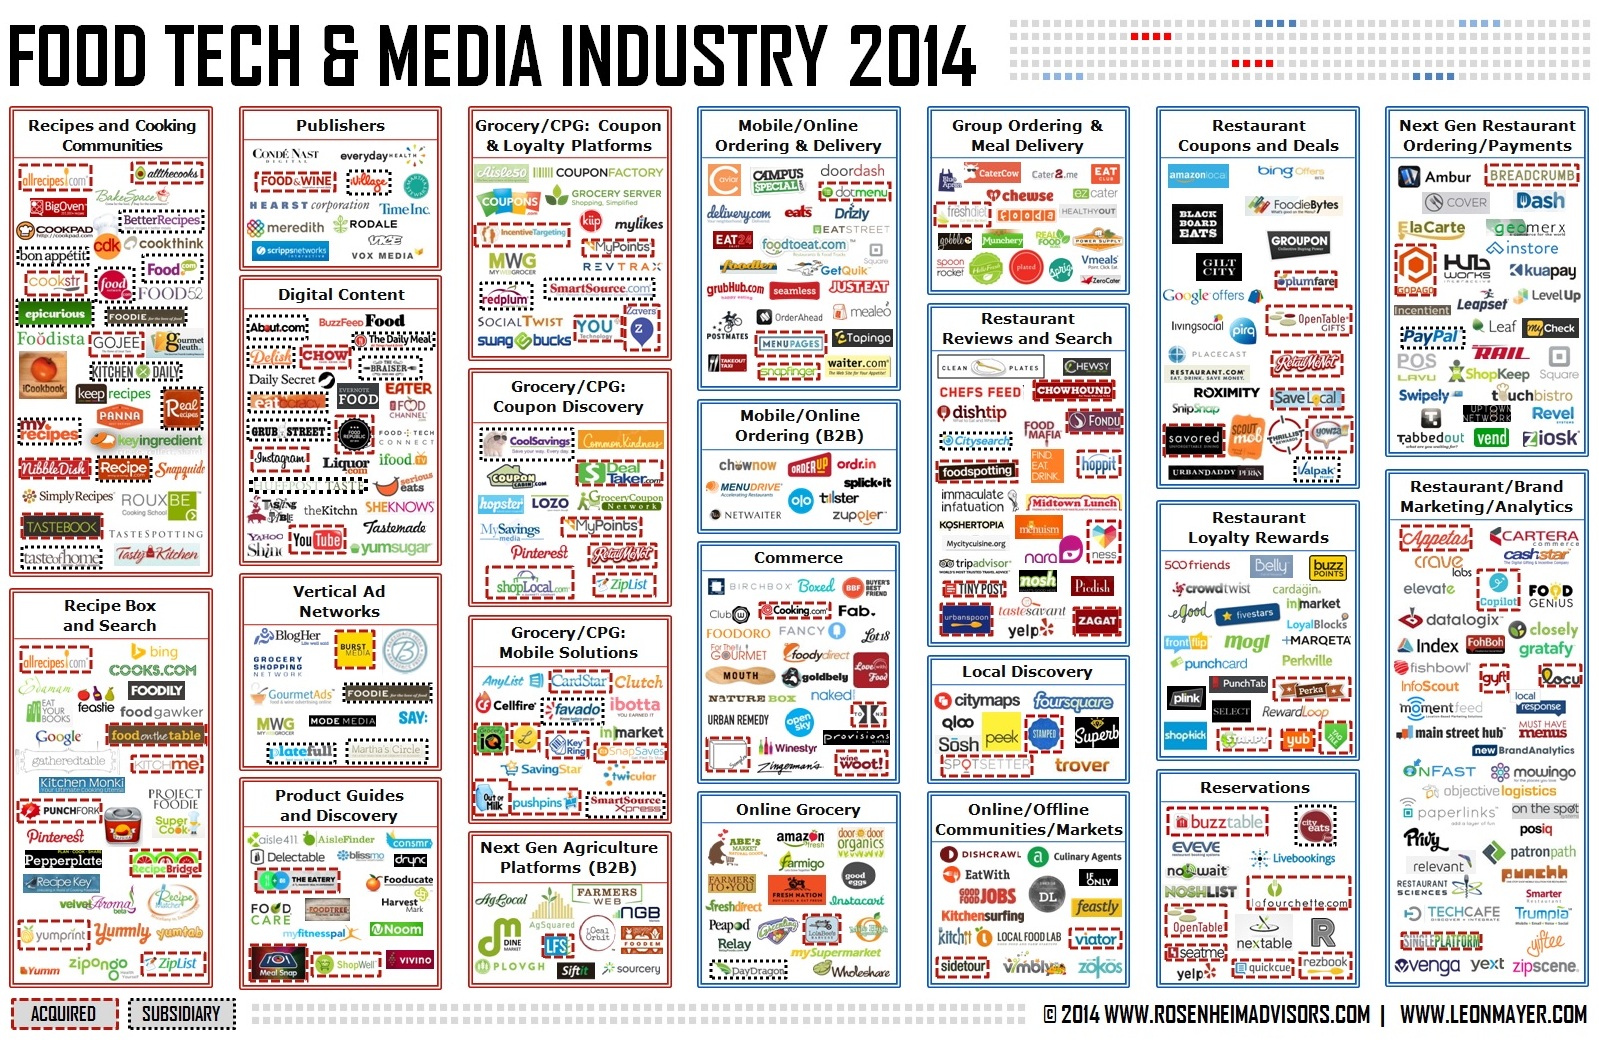 Food Tech and Media Industry 2014 - Rosenheim Advisors and Leon Mayer